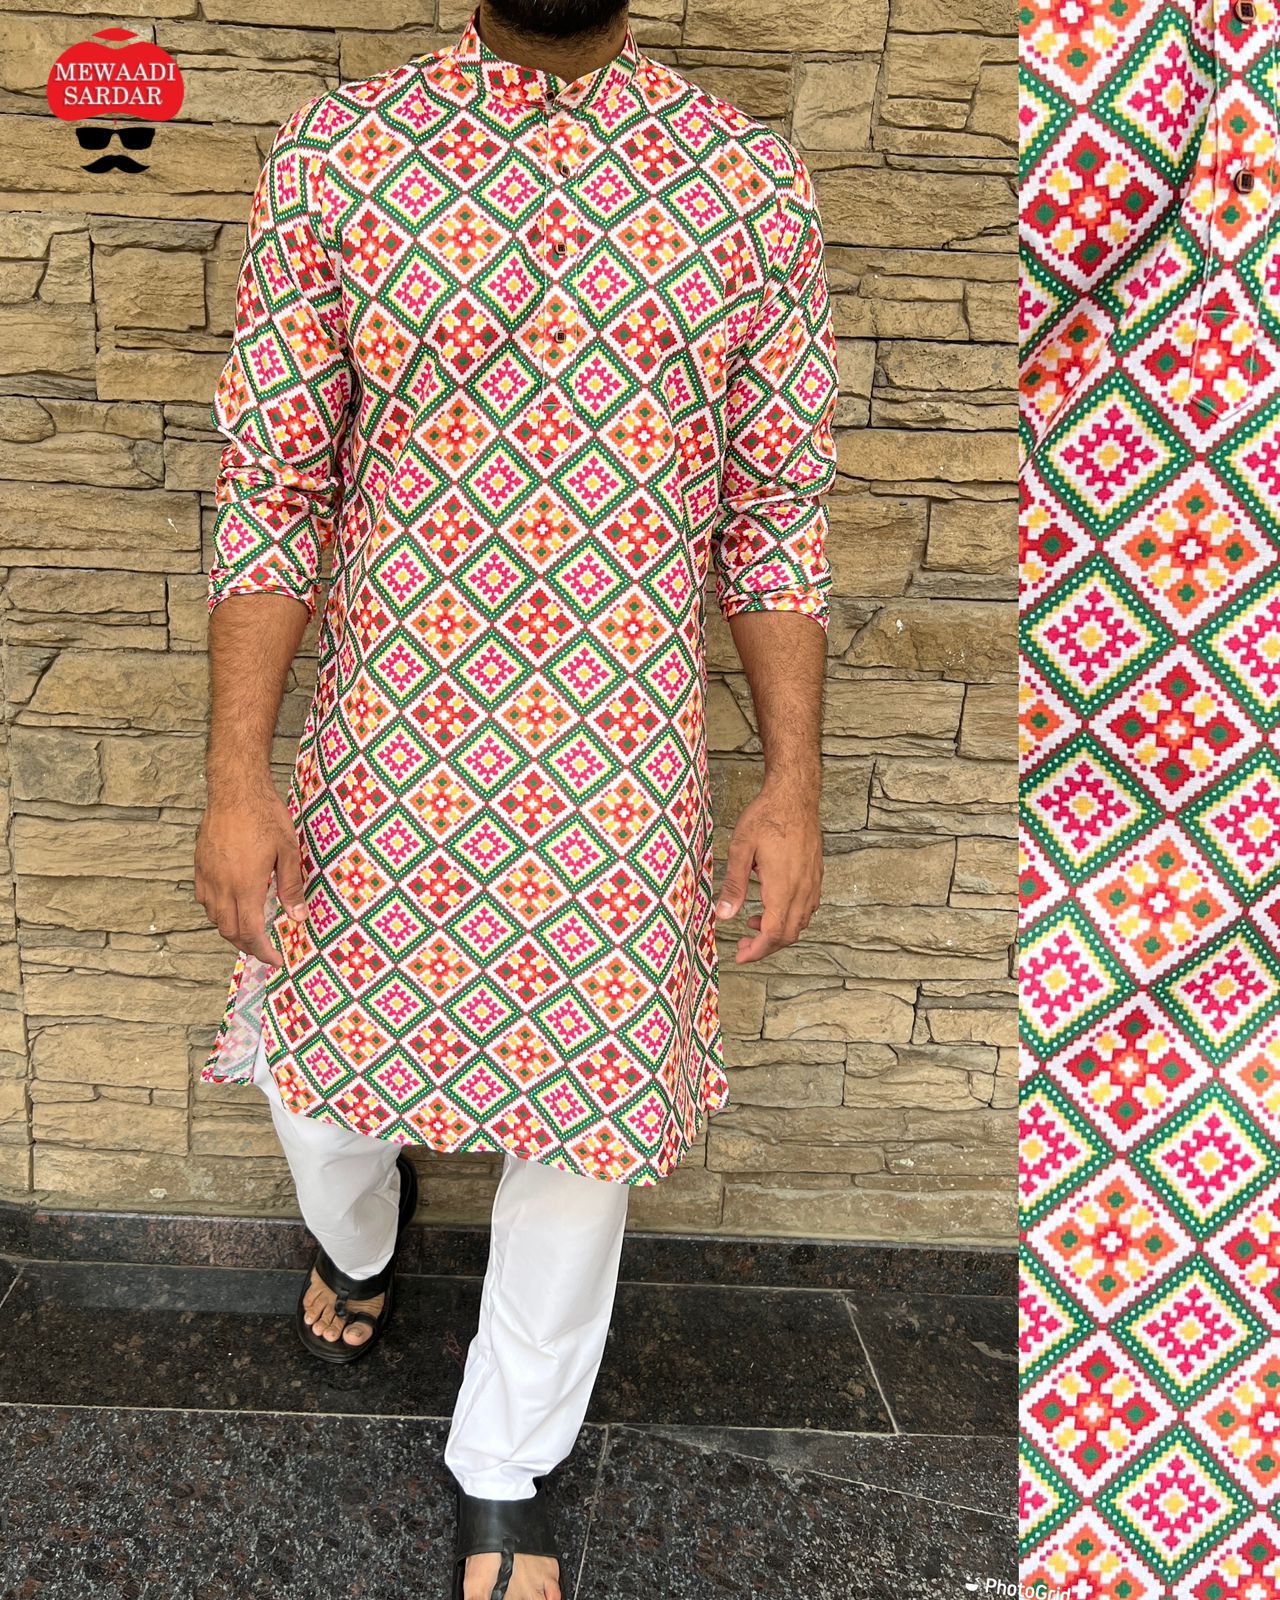 Beautiful Men's Designer Cotton Printed Mewaadi Kurta